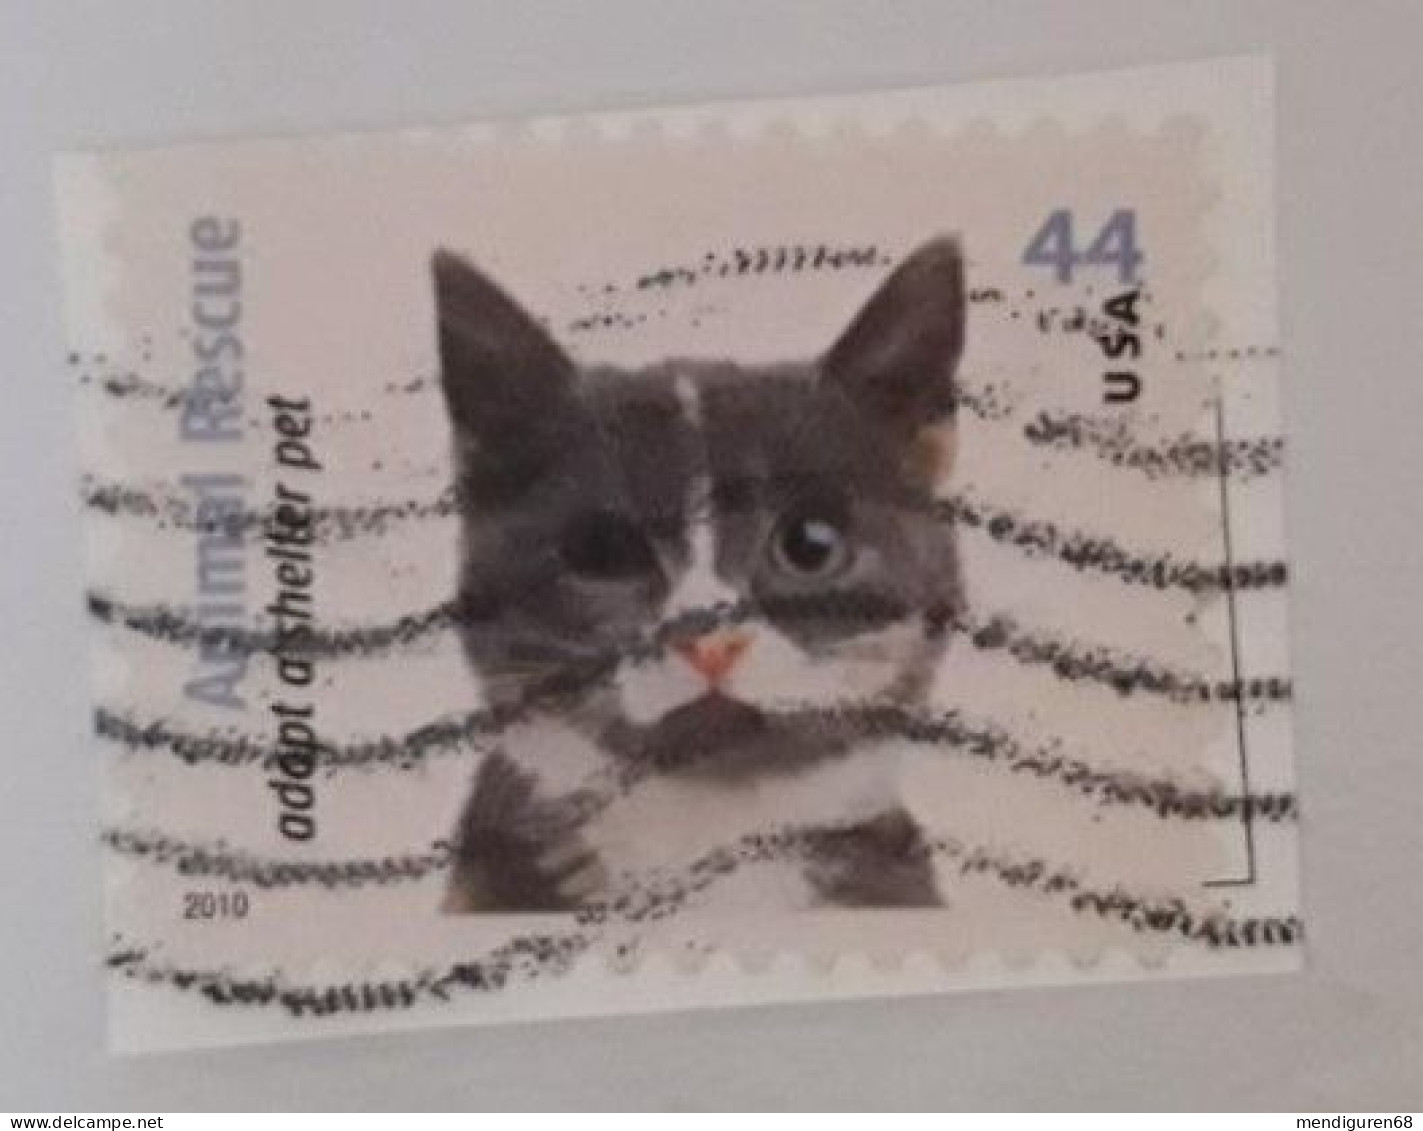 VERINIGTE STAATEN ETATS UNIS USA 2010 ANIMAL RESCUE:GREY, WHITE & TAN CAT 44¢ USED PAPER SC 4456 YT 4277 MI 4616 SG 5043 - Used Stamps